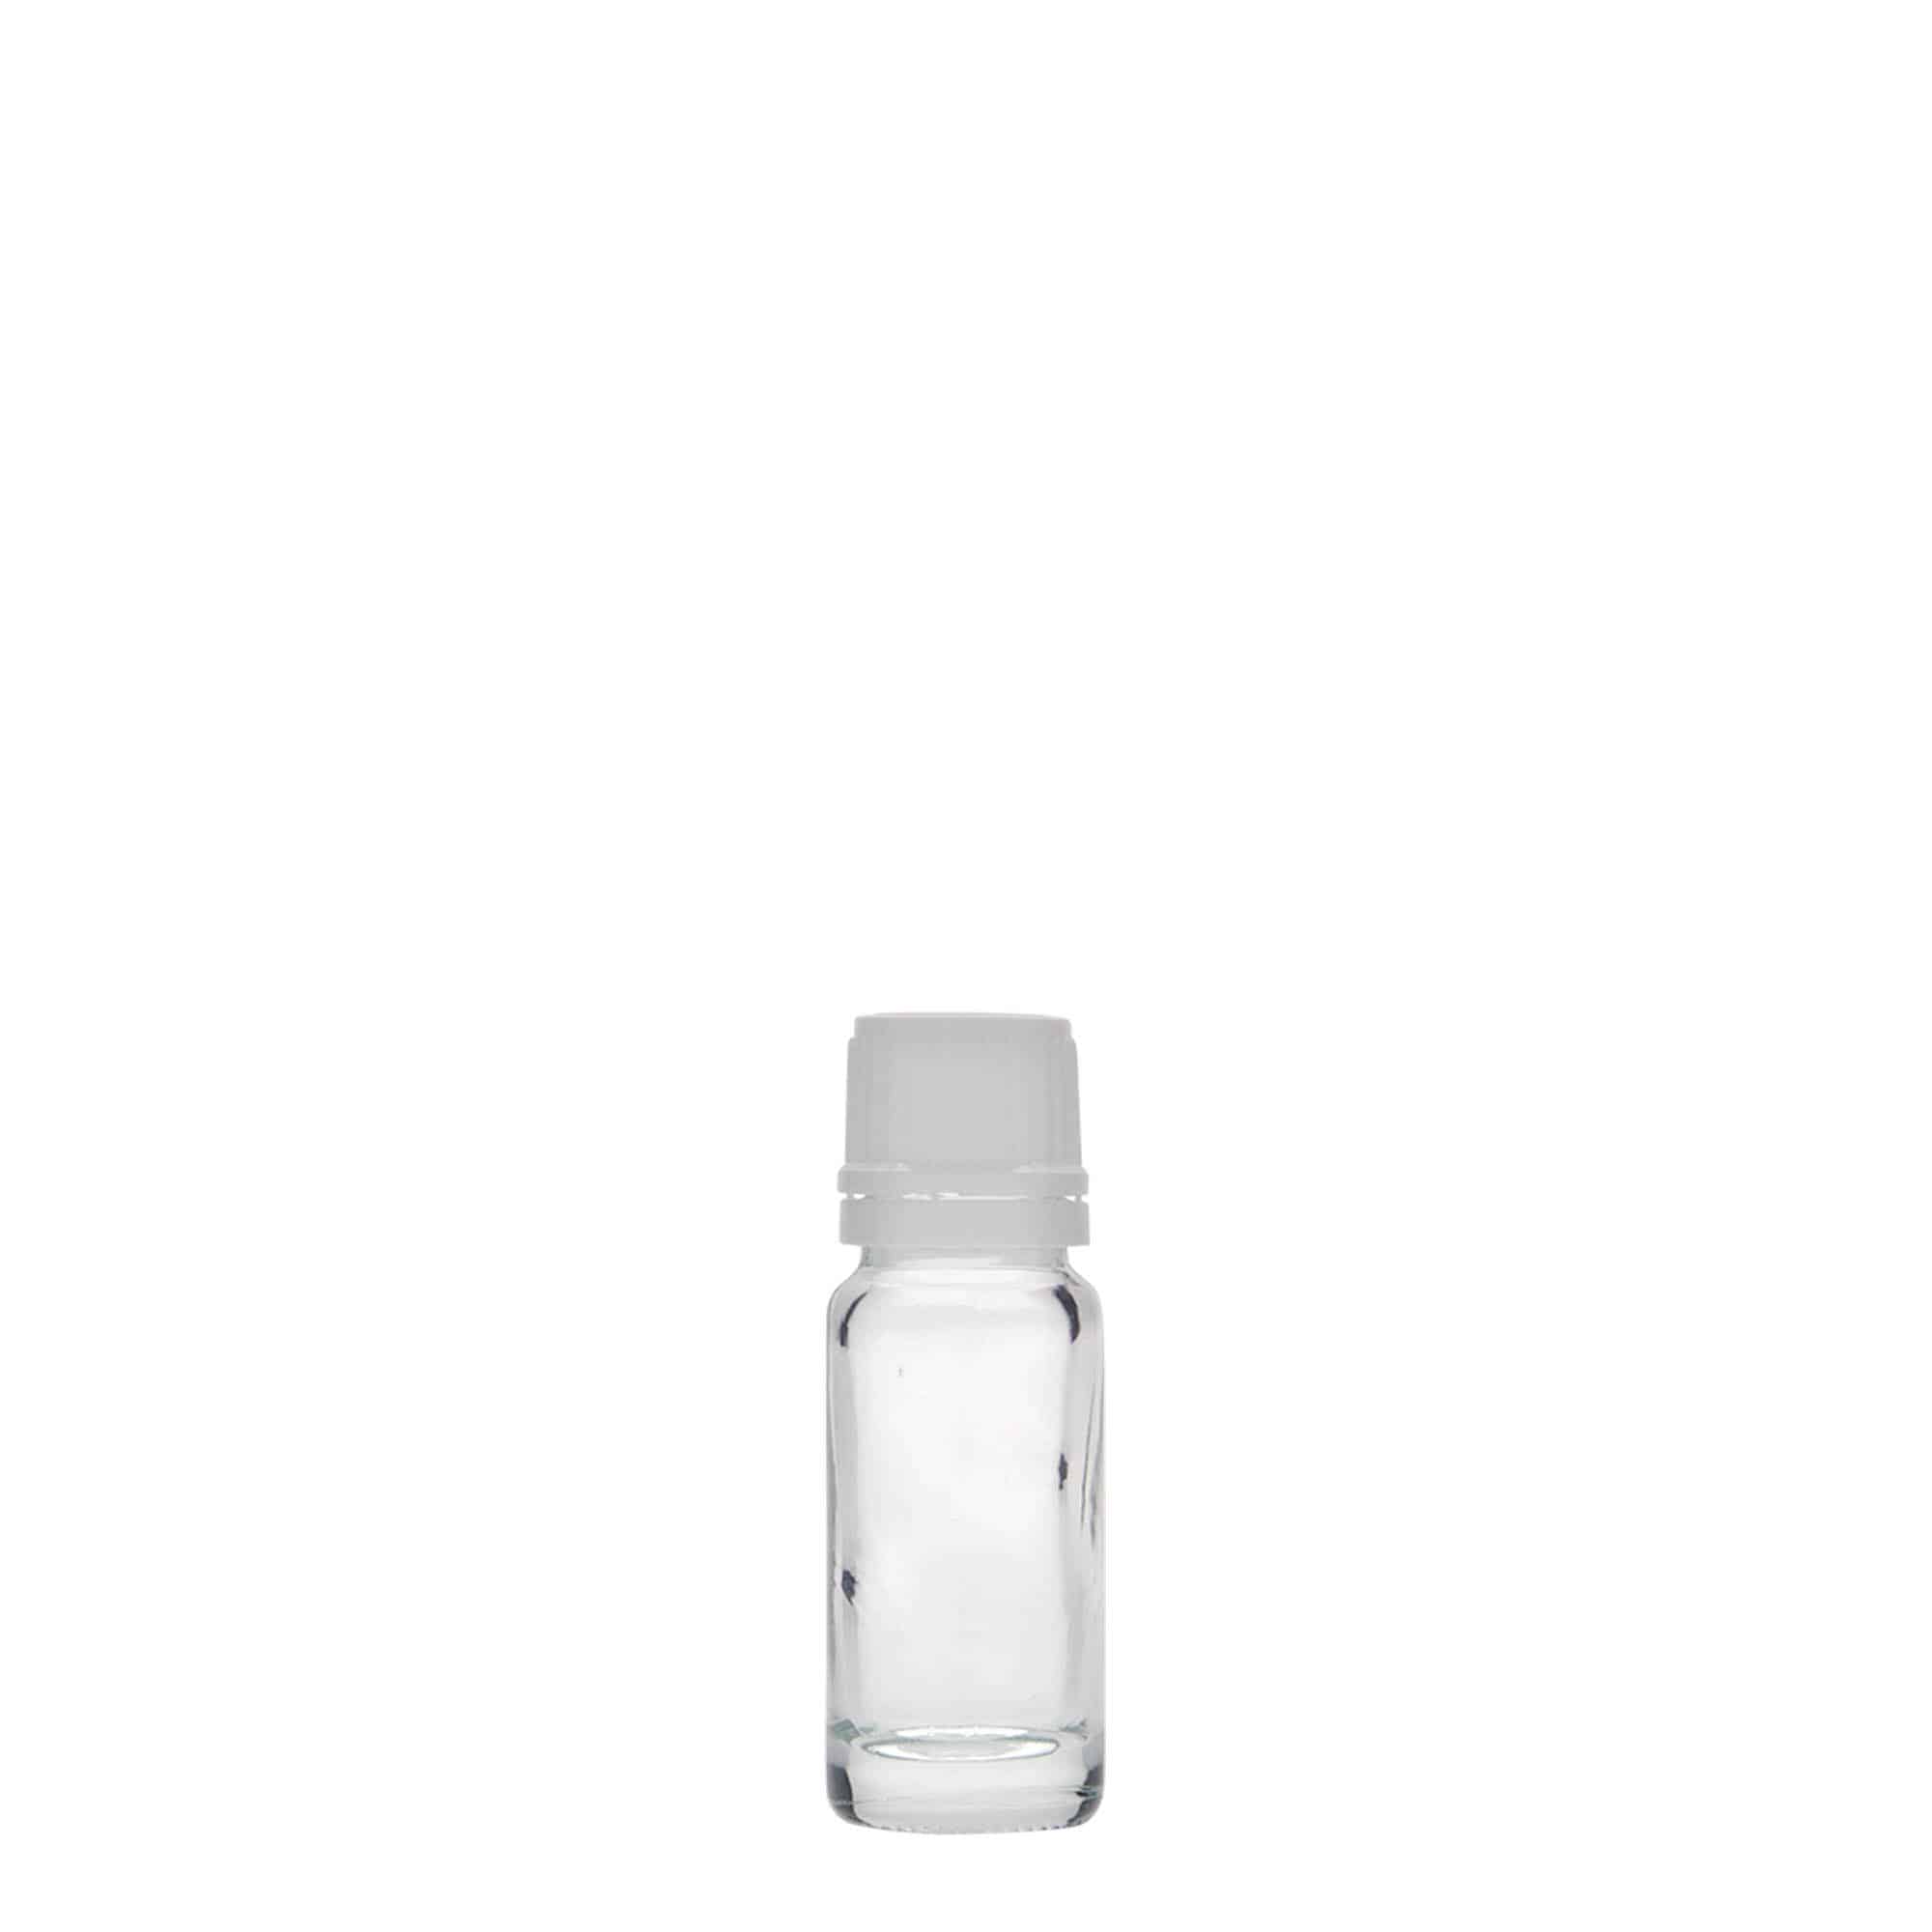 Flacon pharmaceutique 10 ml, verre, bouchage: DIN 18